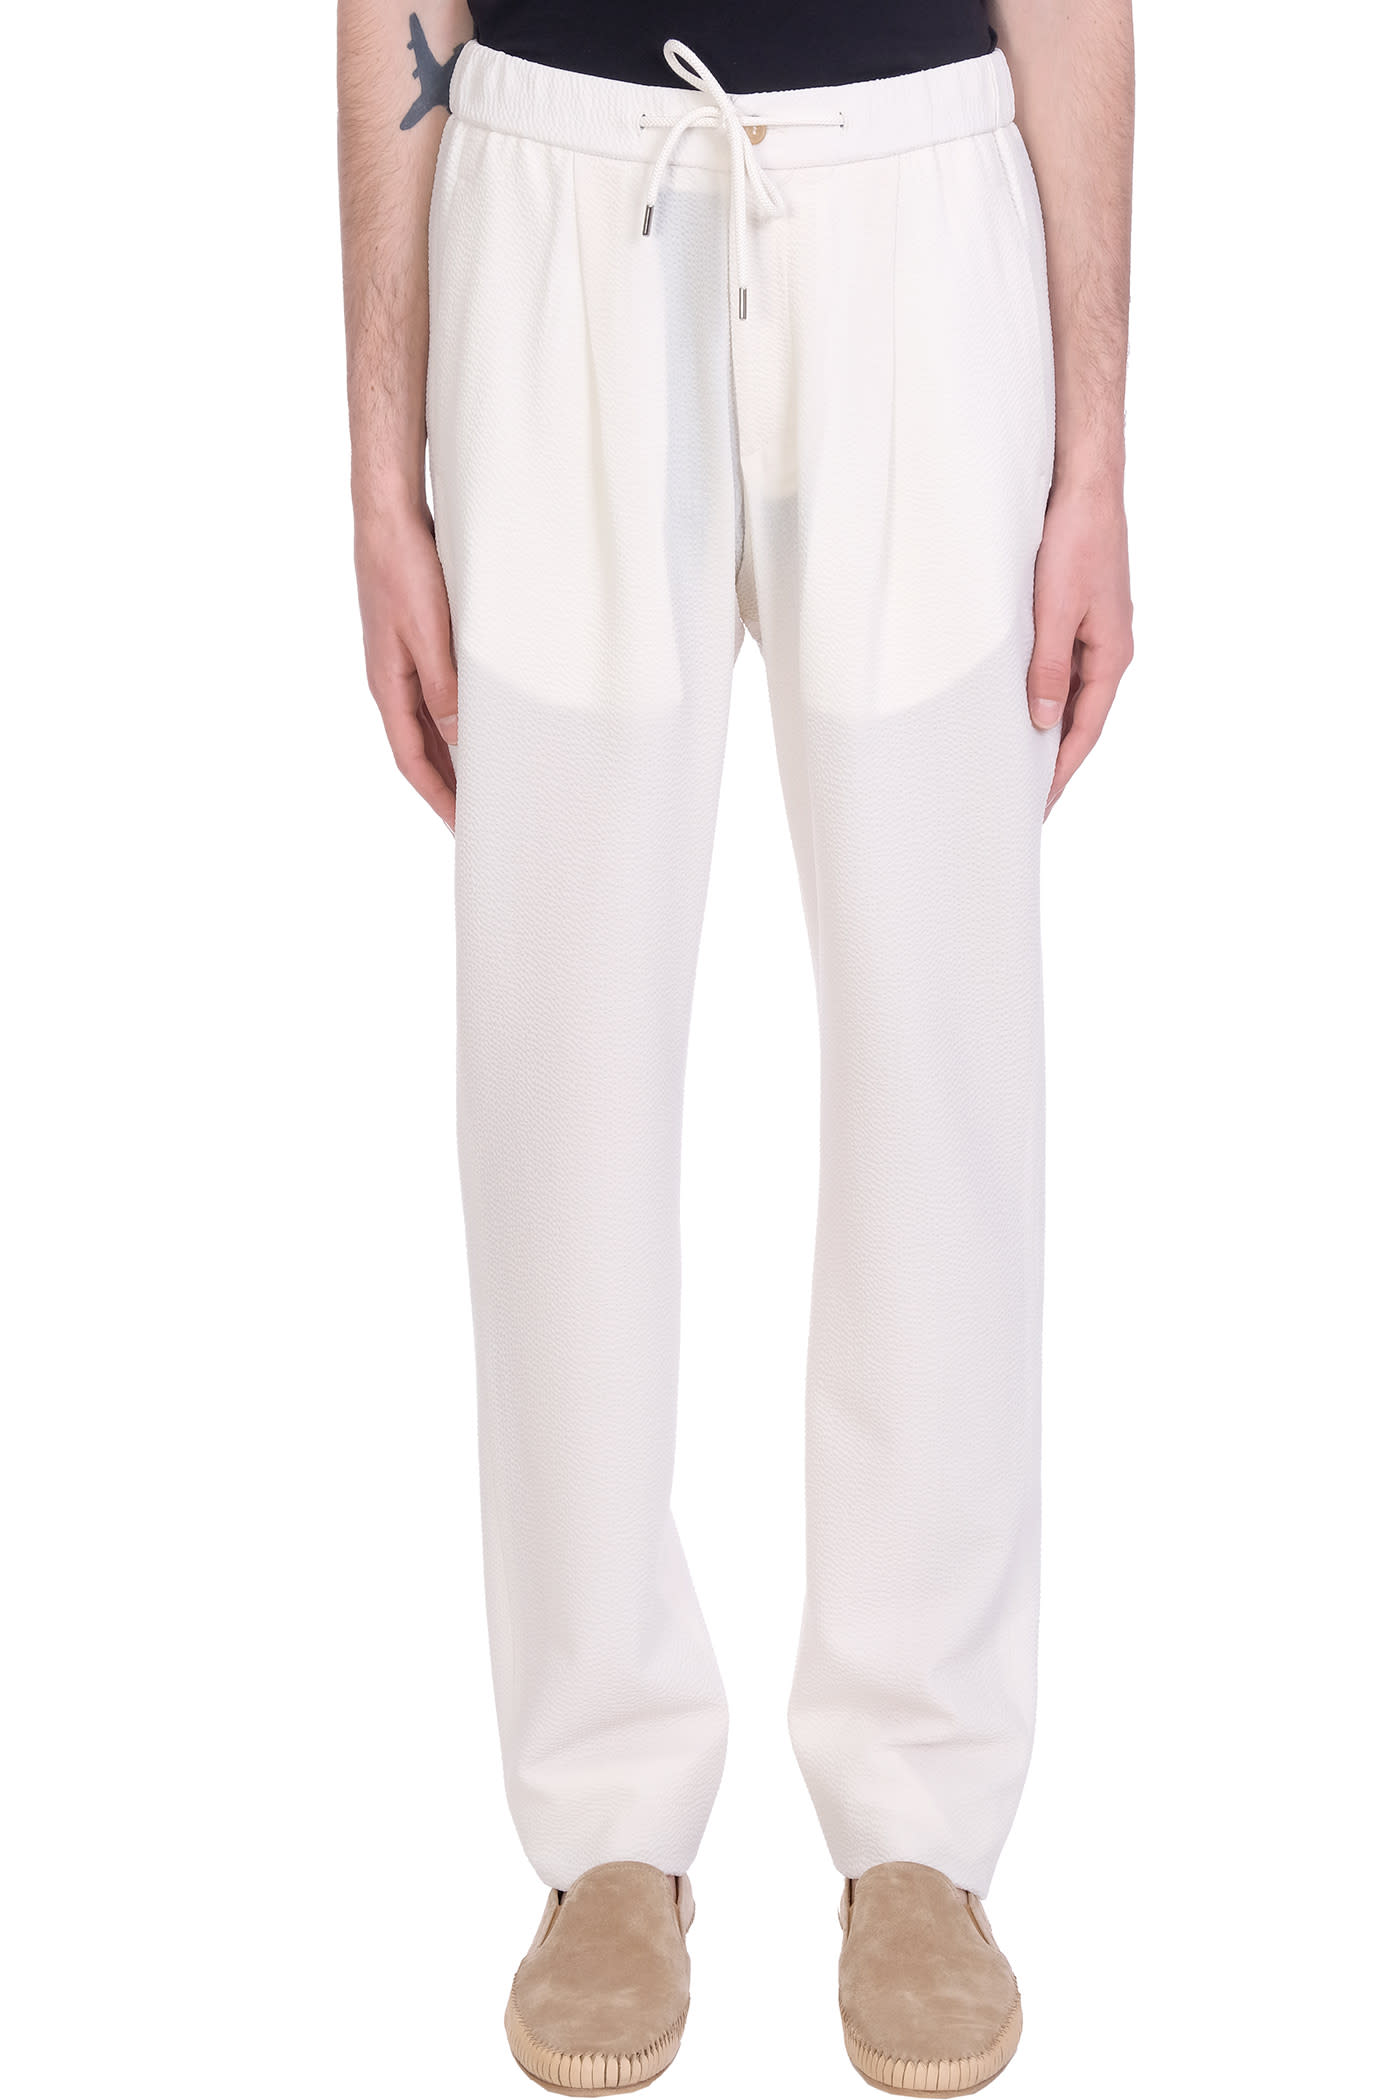 Giorgio Armani Pants In White Wool